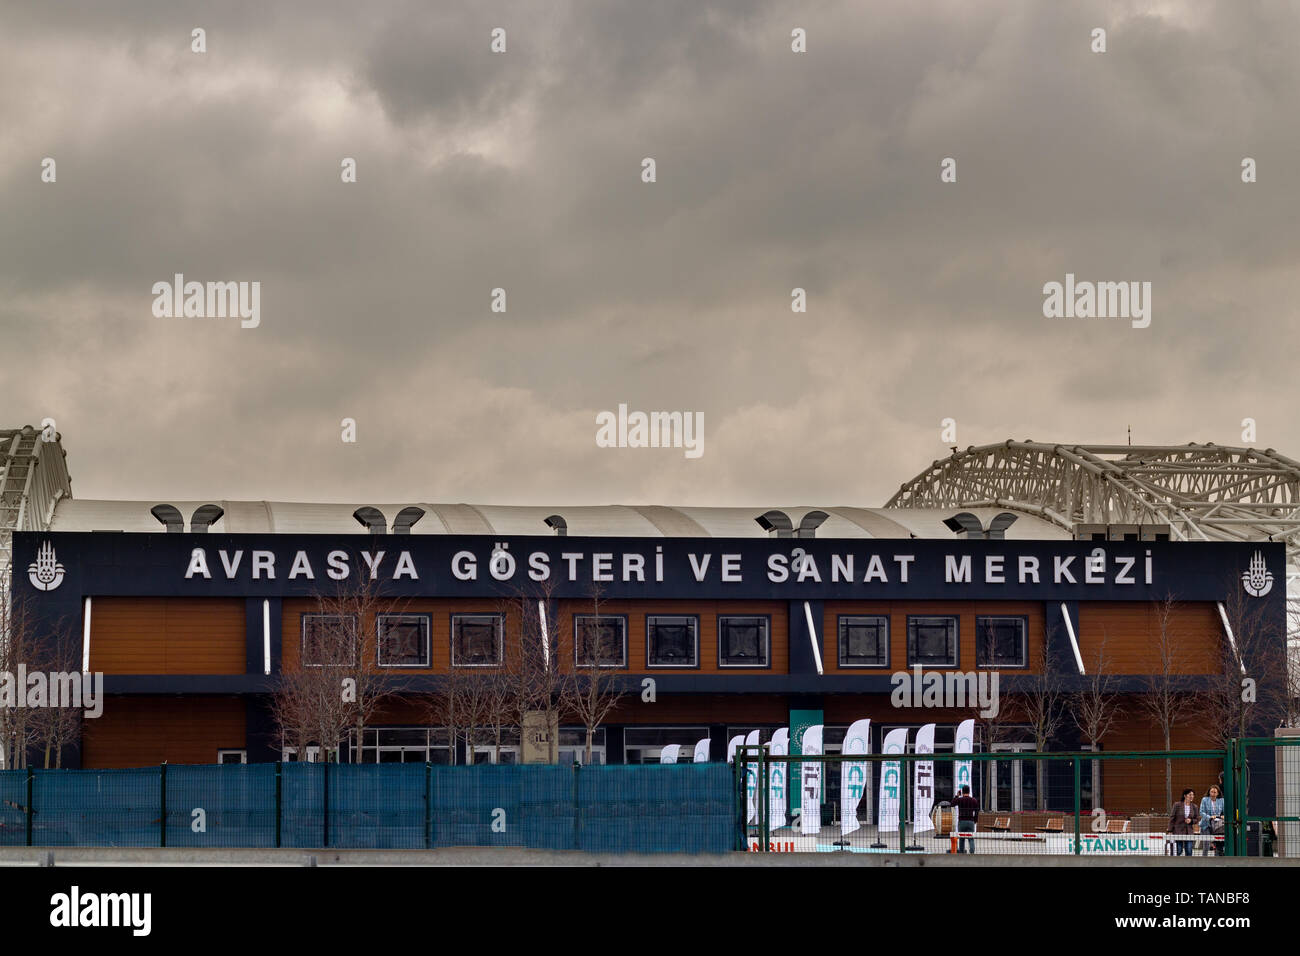 Yenikapi, Fatih, Istanbul / Turkey - March 21 2019: Istanbul Eurasia (Avrasya) show and art center exterior view Stock Photo